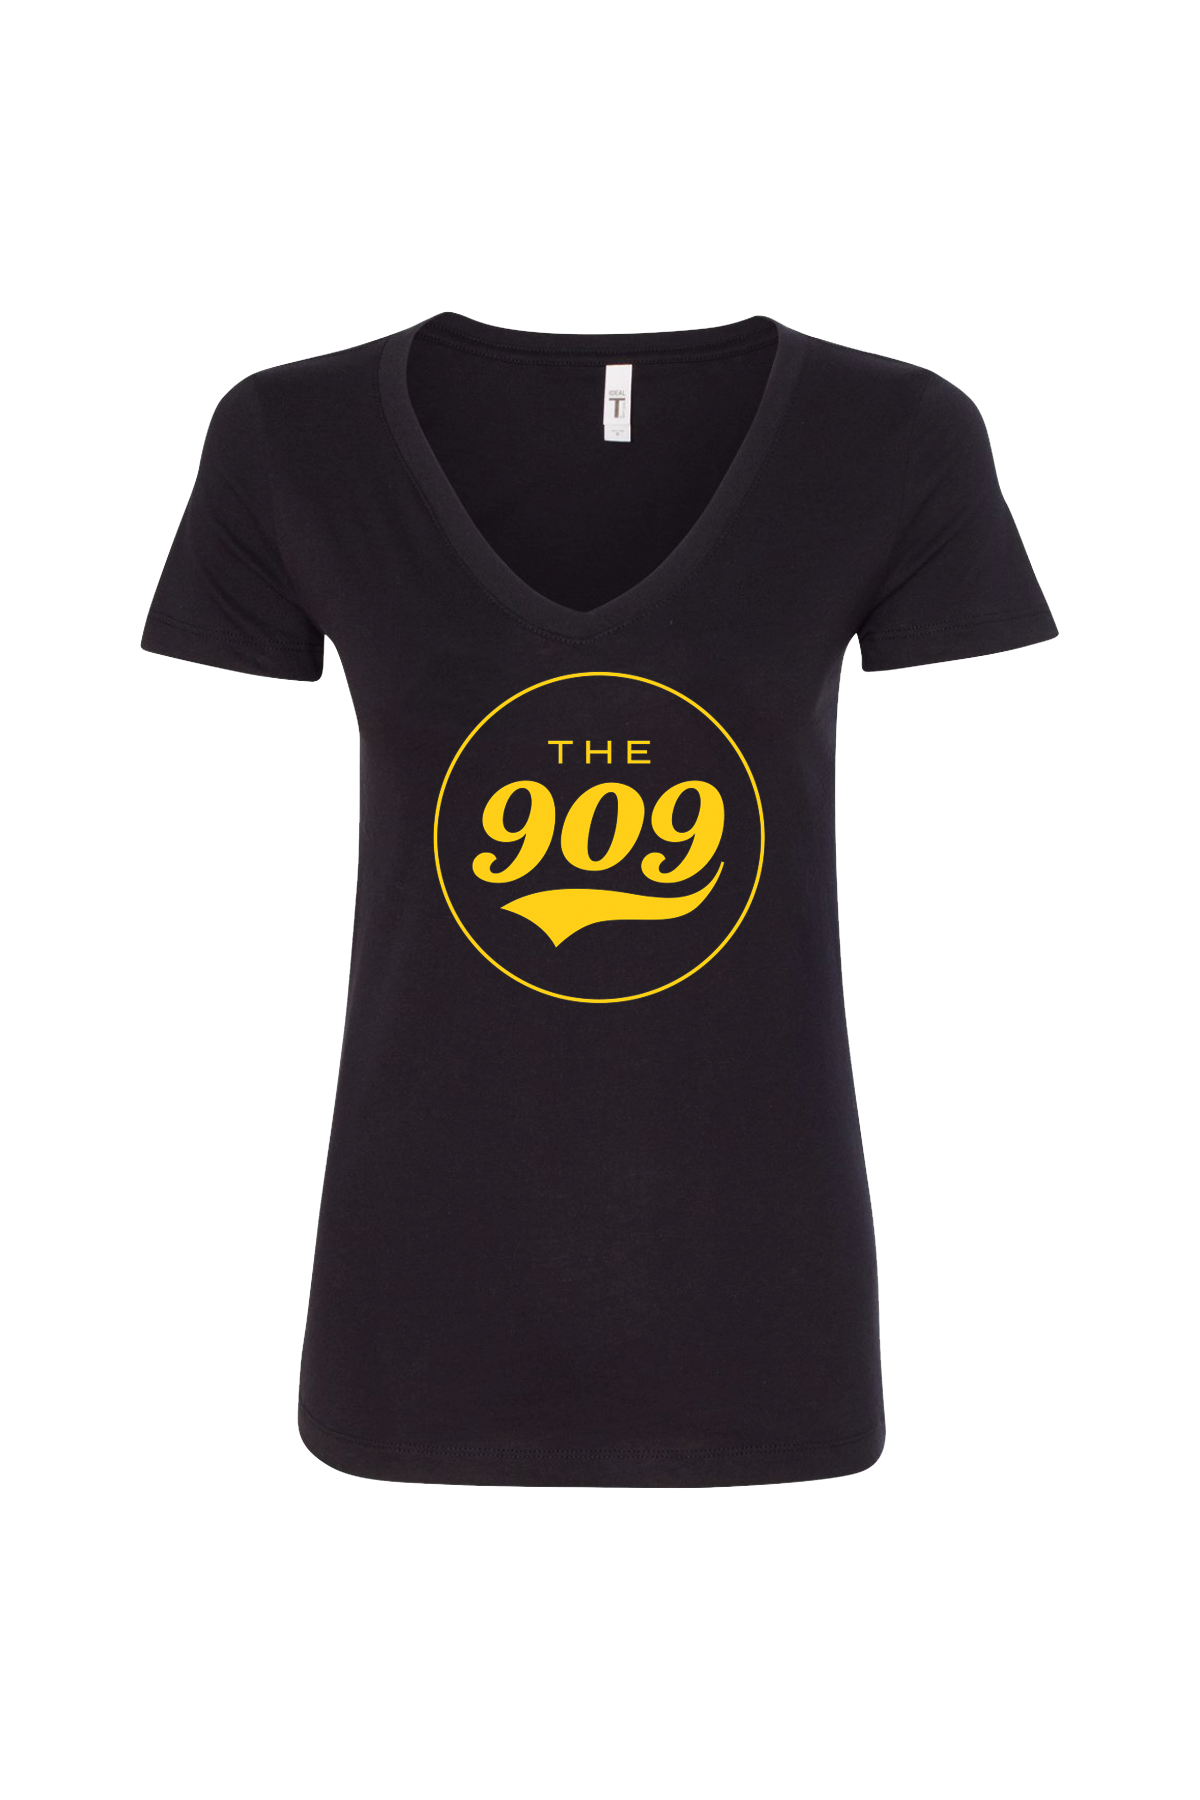 The 909 Ladies VNeck Shirt - Black